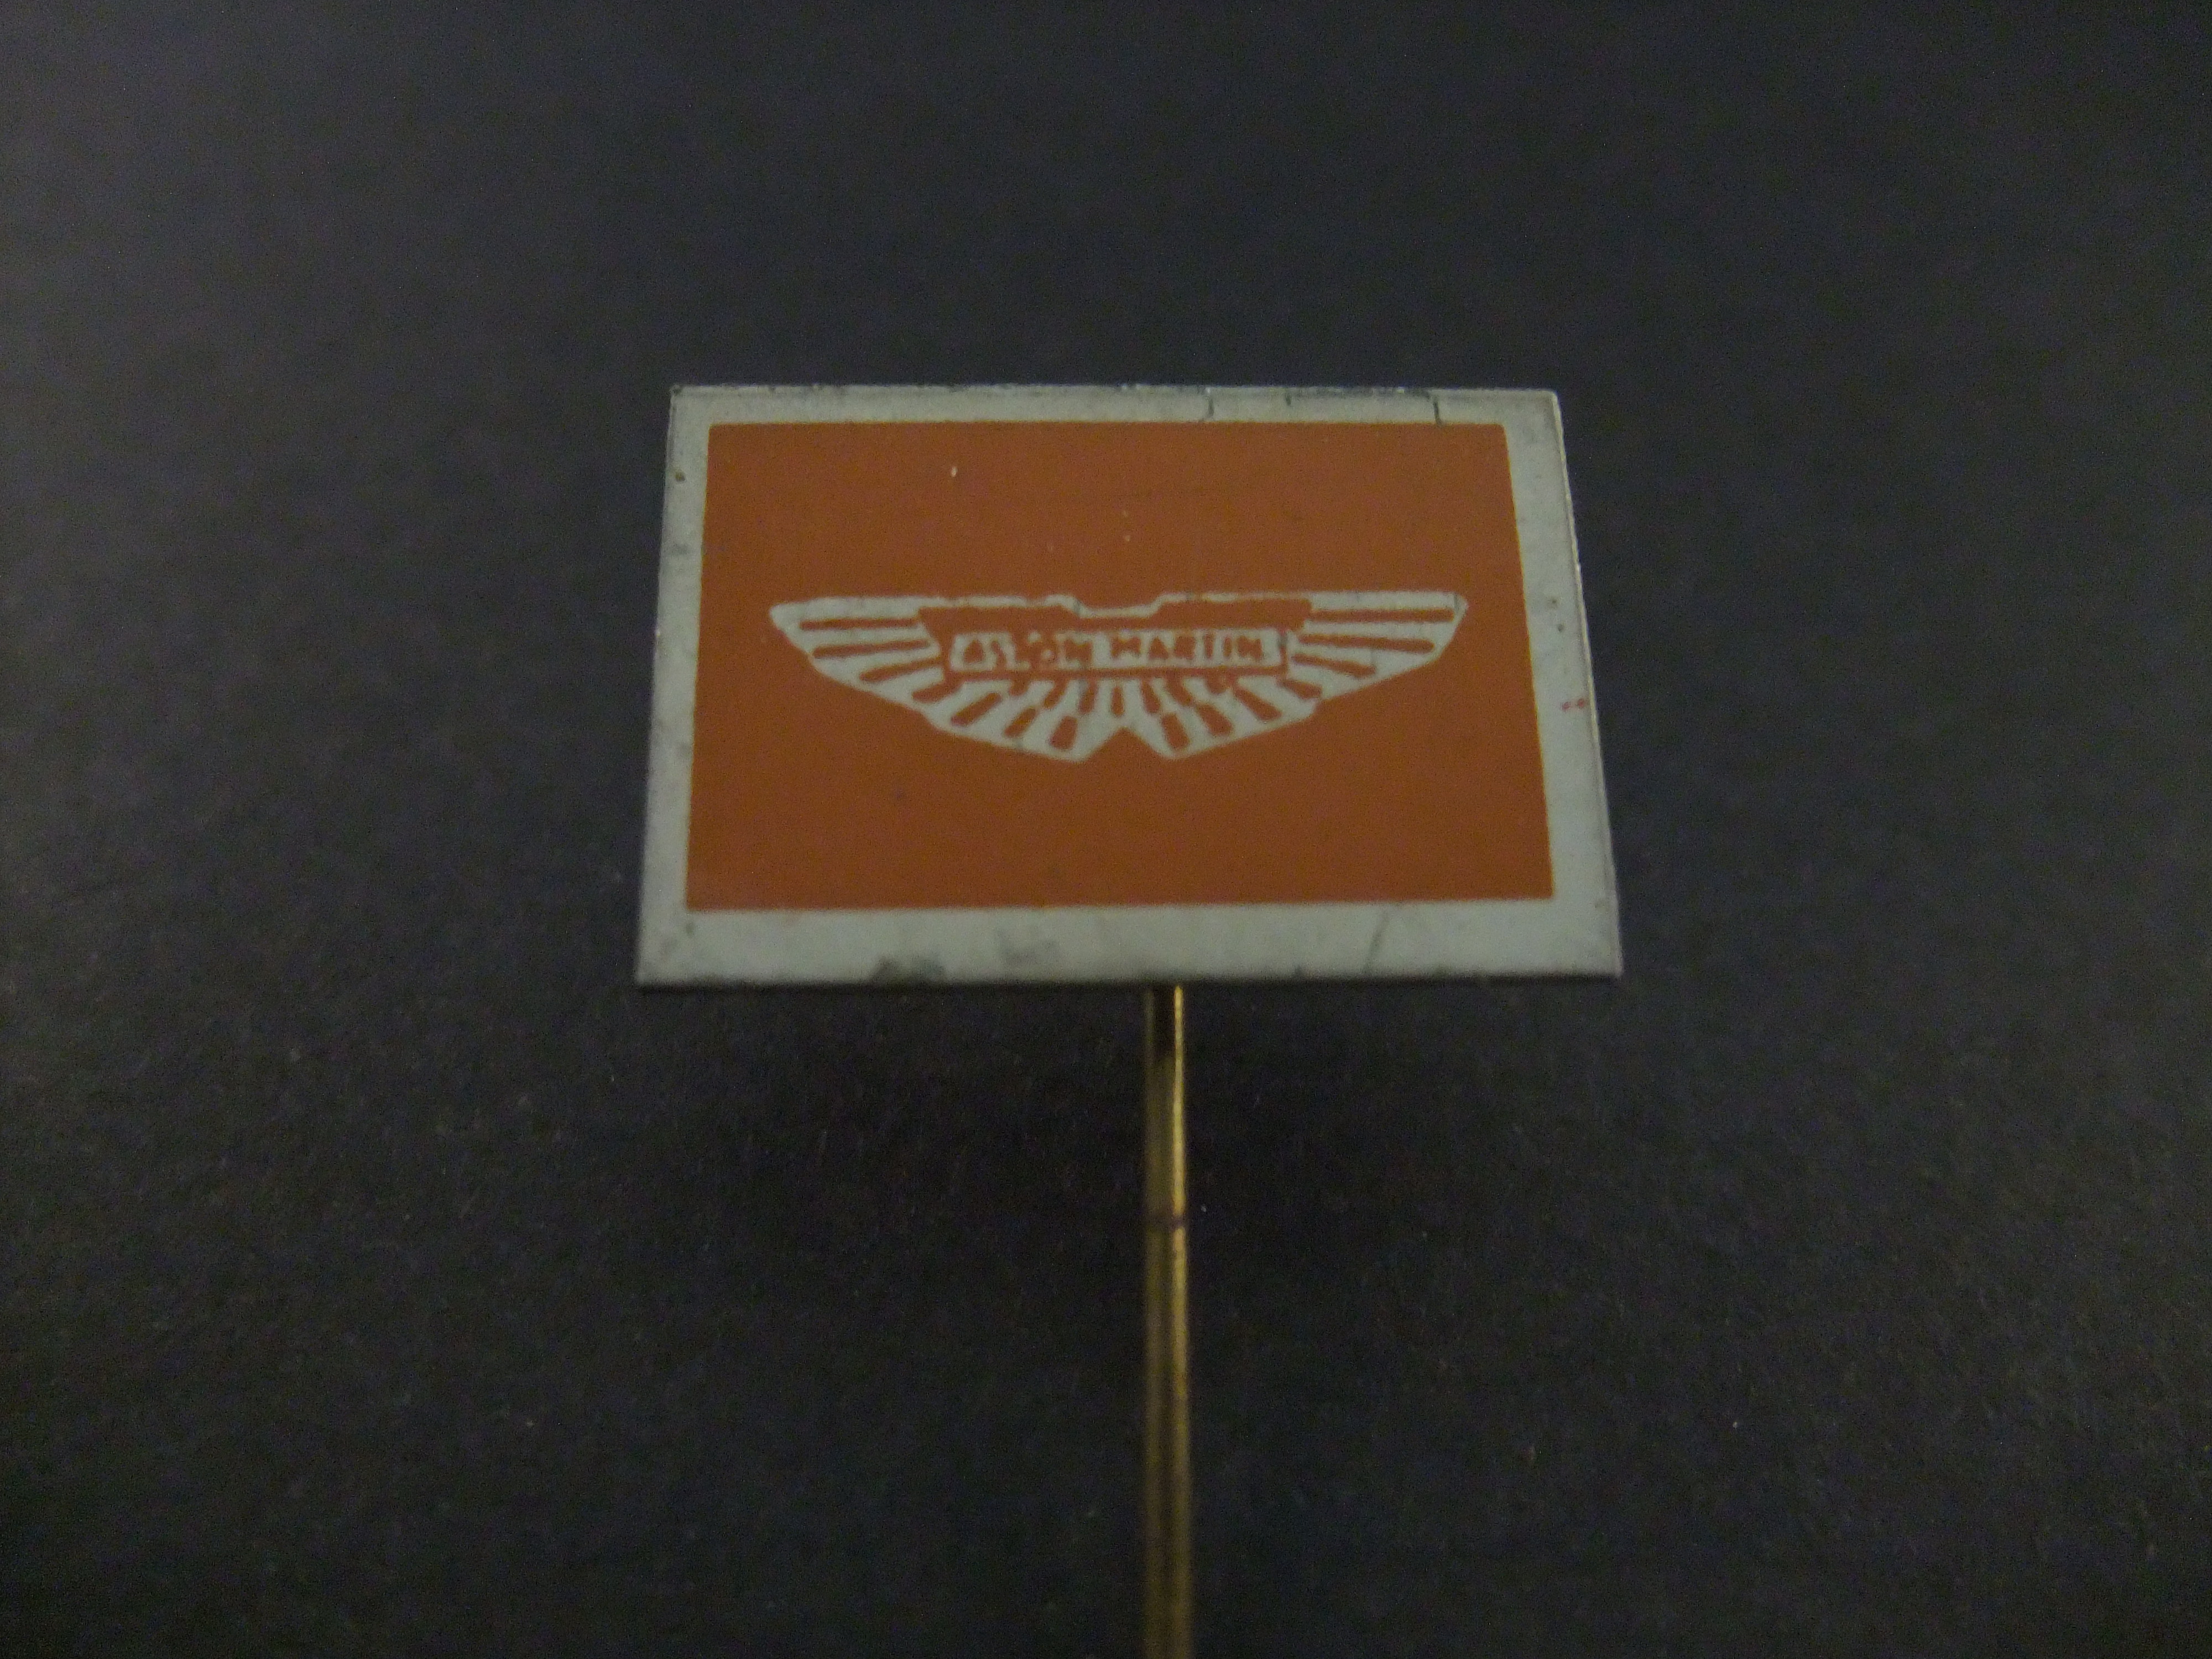 Aston Martin Engels automerk oud logo oranje